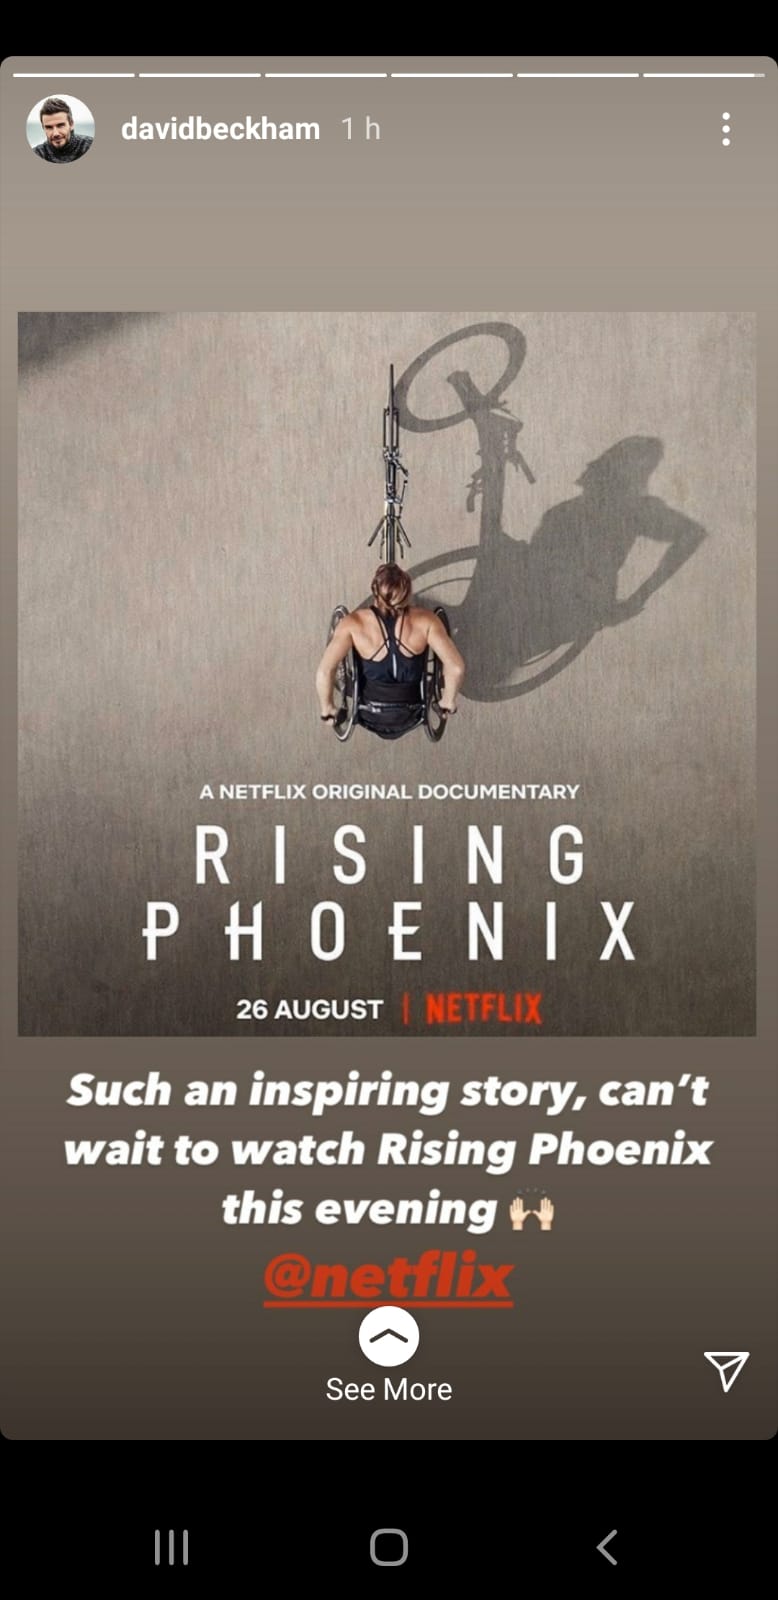 David Beckham's Instagram story about Rising Phoenix documentary